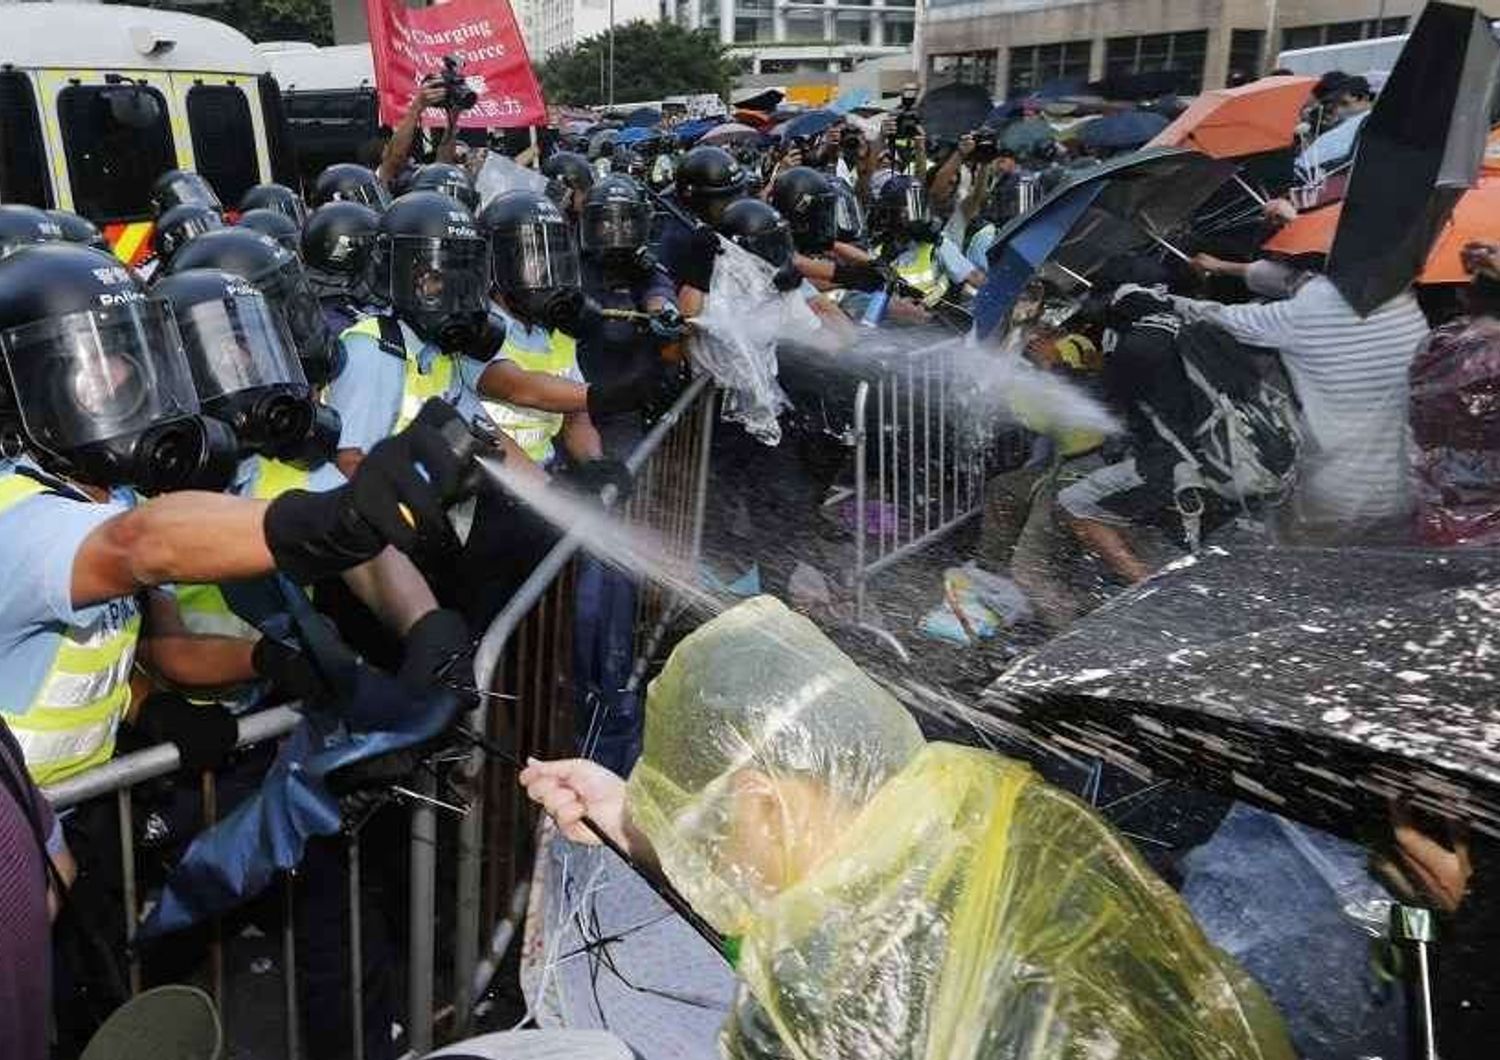 Cina: Hong Kong, gas lacrimogeni polizia su manifestanti - Video